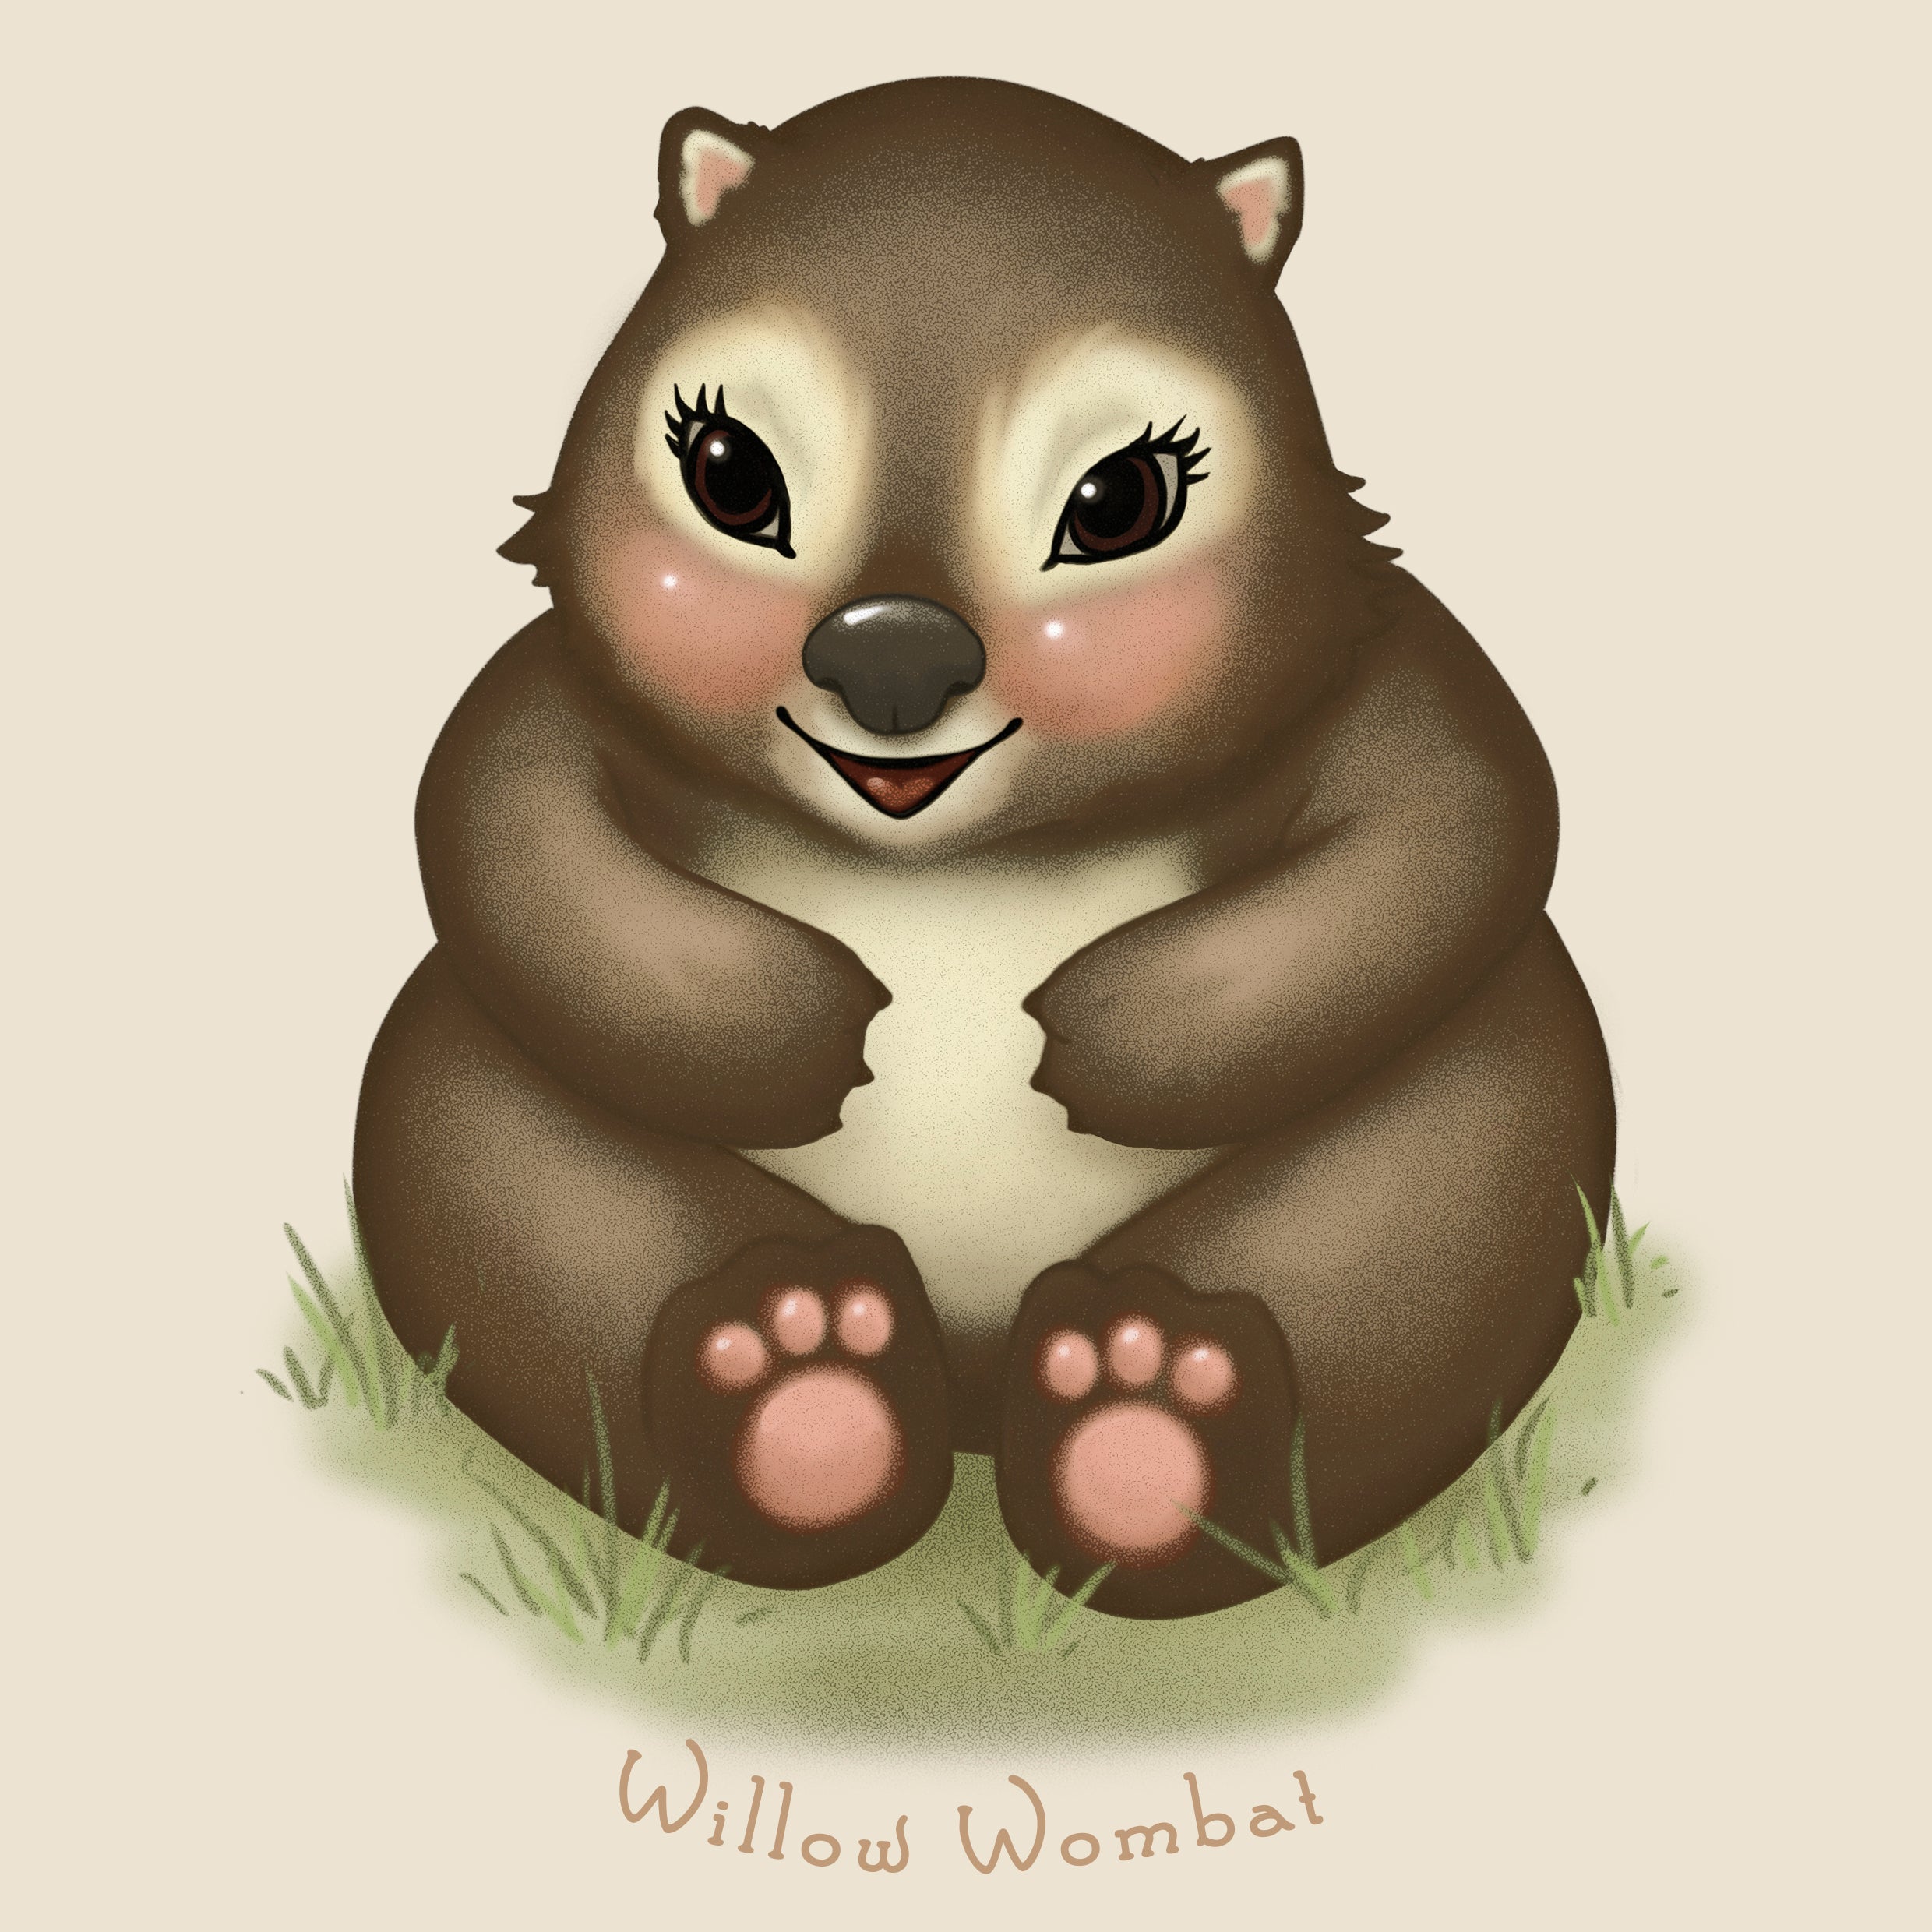 Willow Wombat Digital Art Download